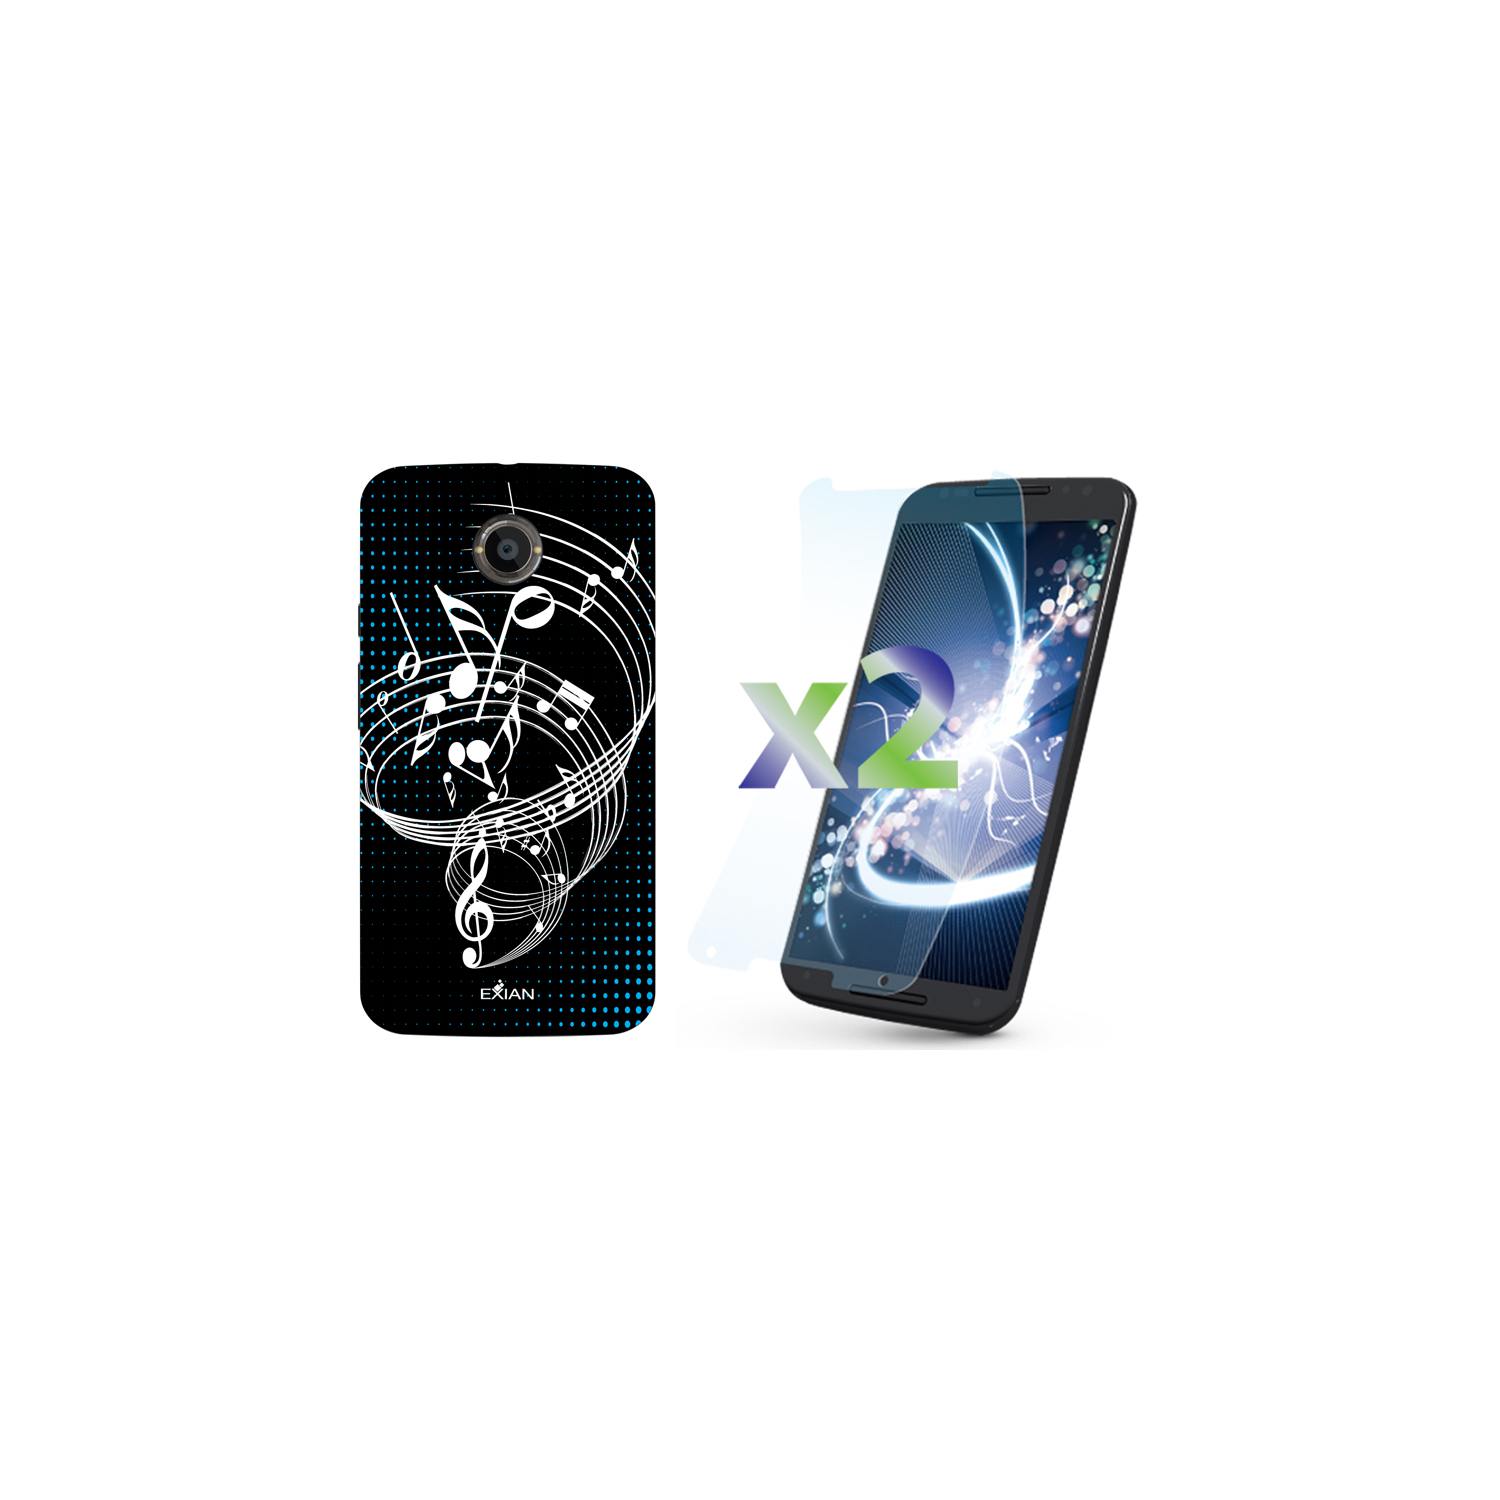 Exian Motorola Moto X2(2nd Gen) Screen Protectors X 2 and TPU Case Exian Design Musical Notes Black